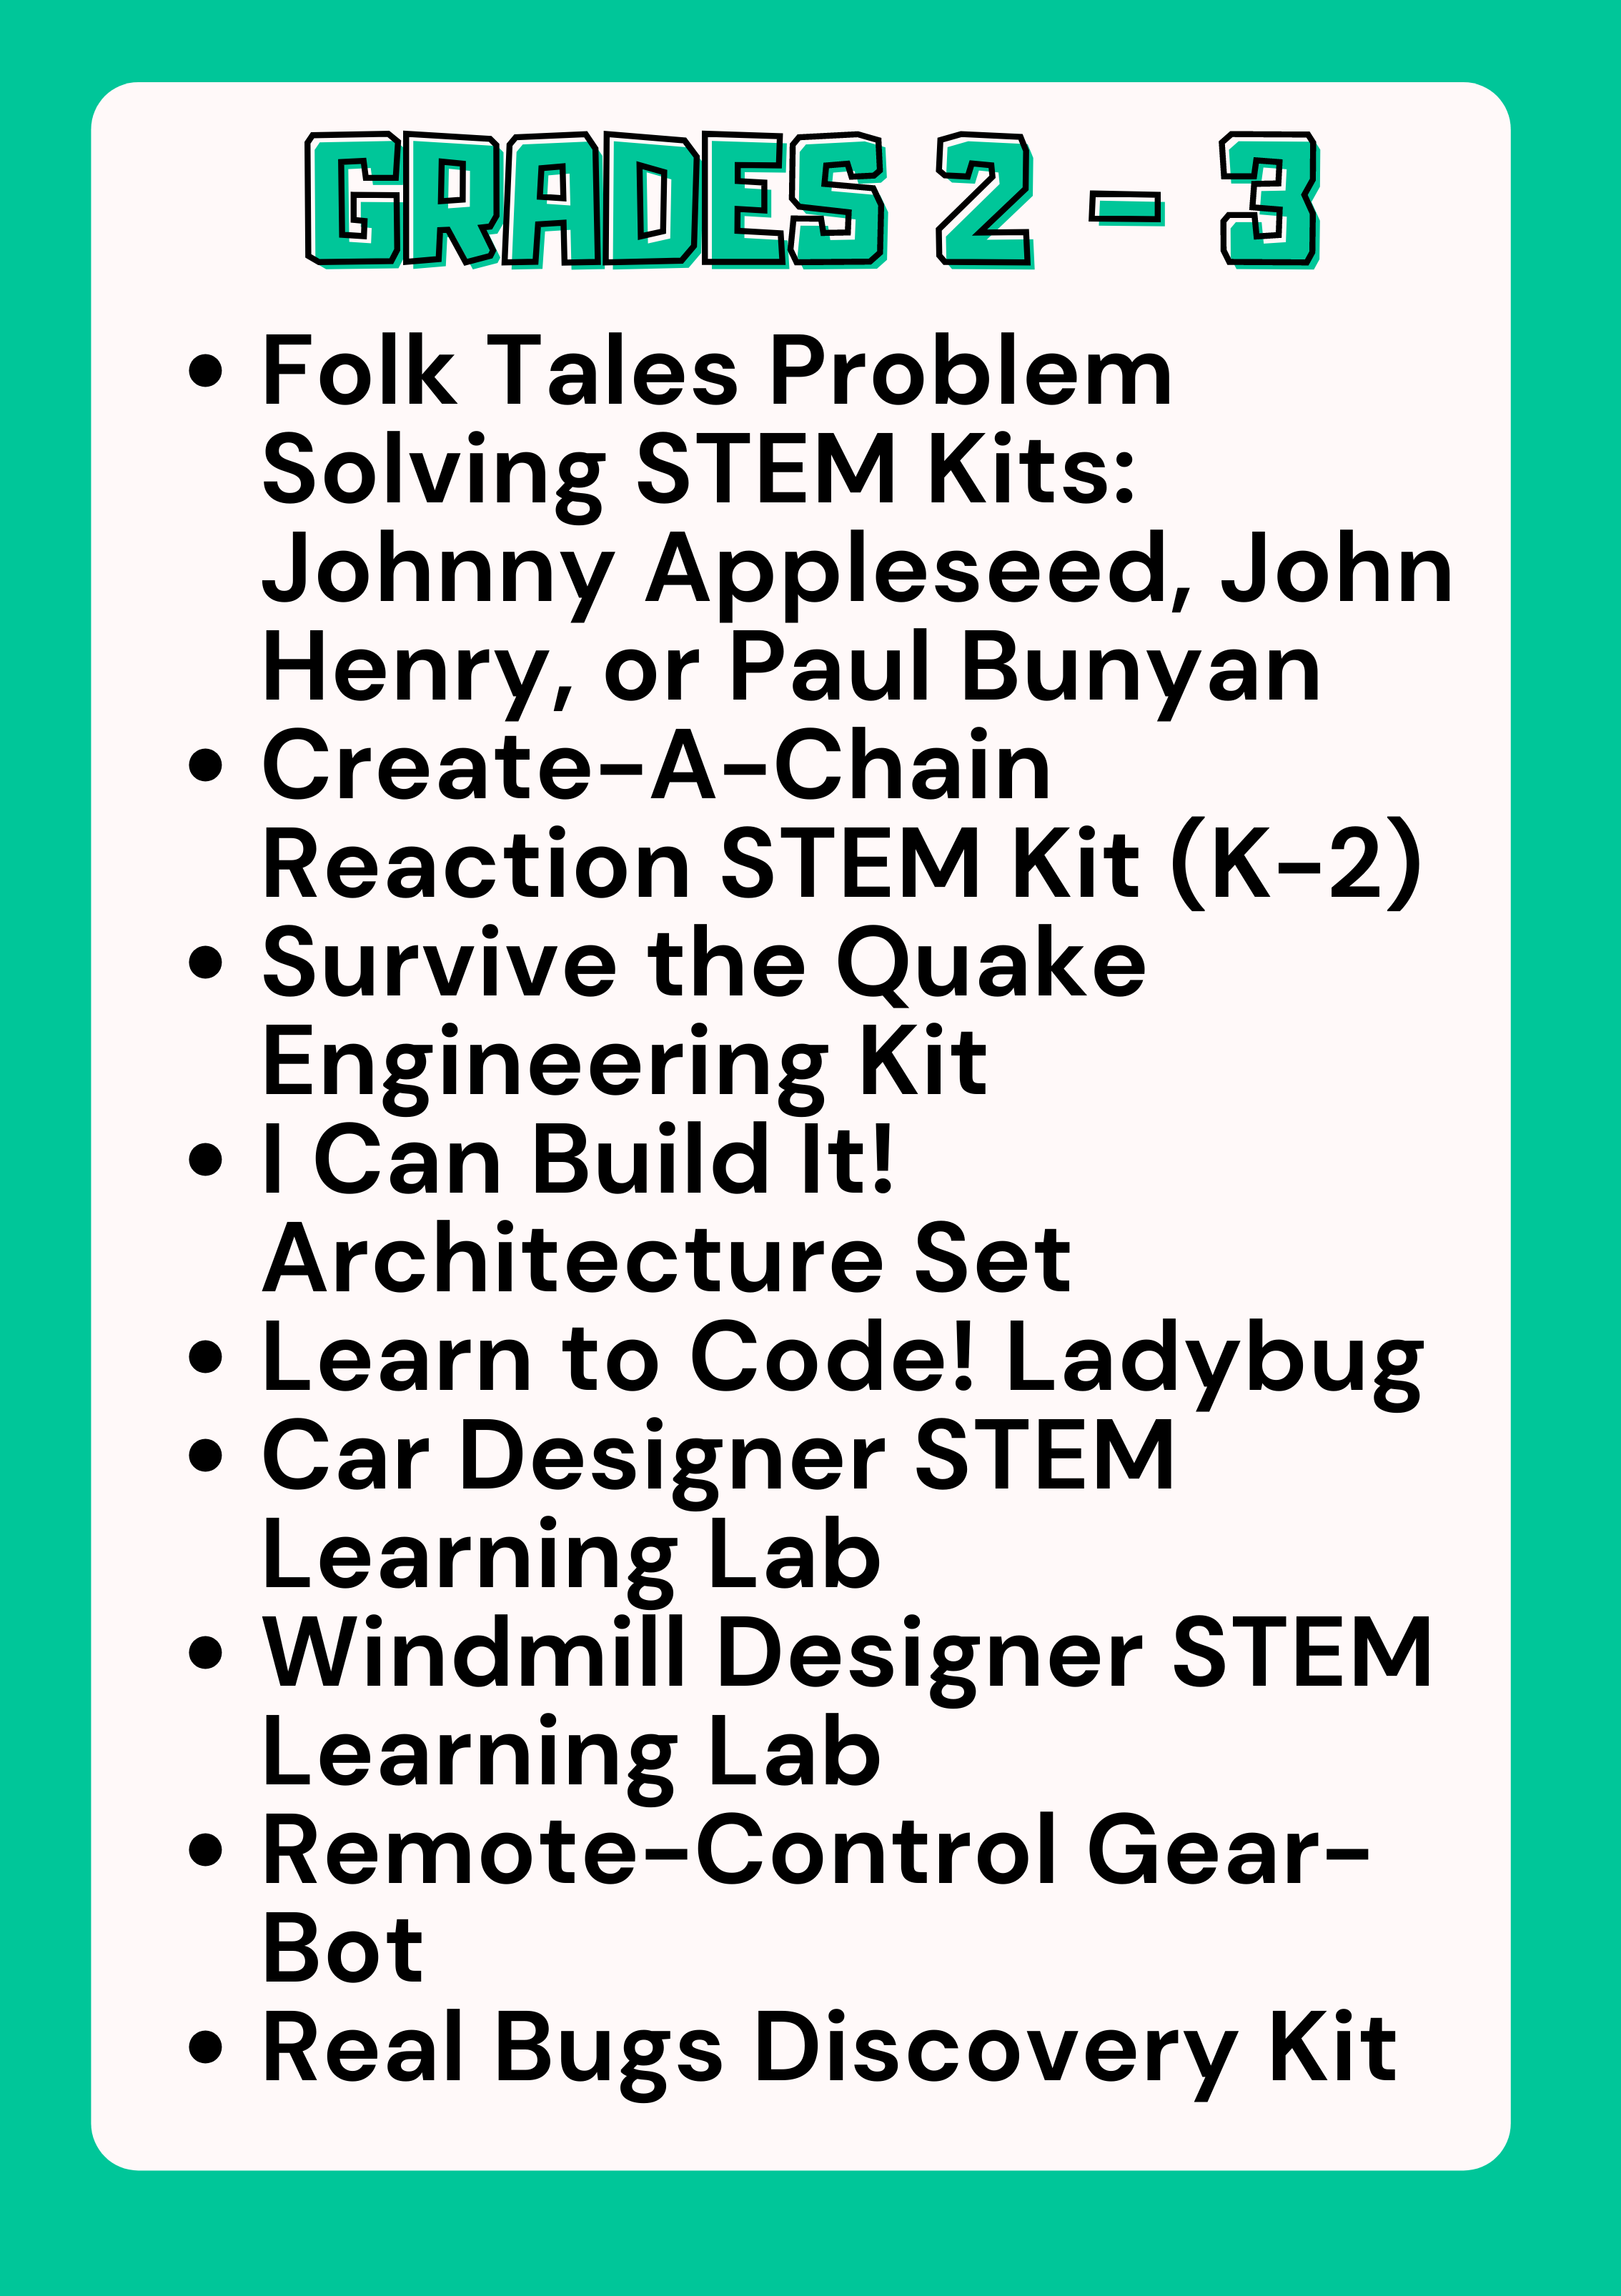 STEM Learning Kits